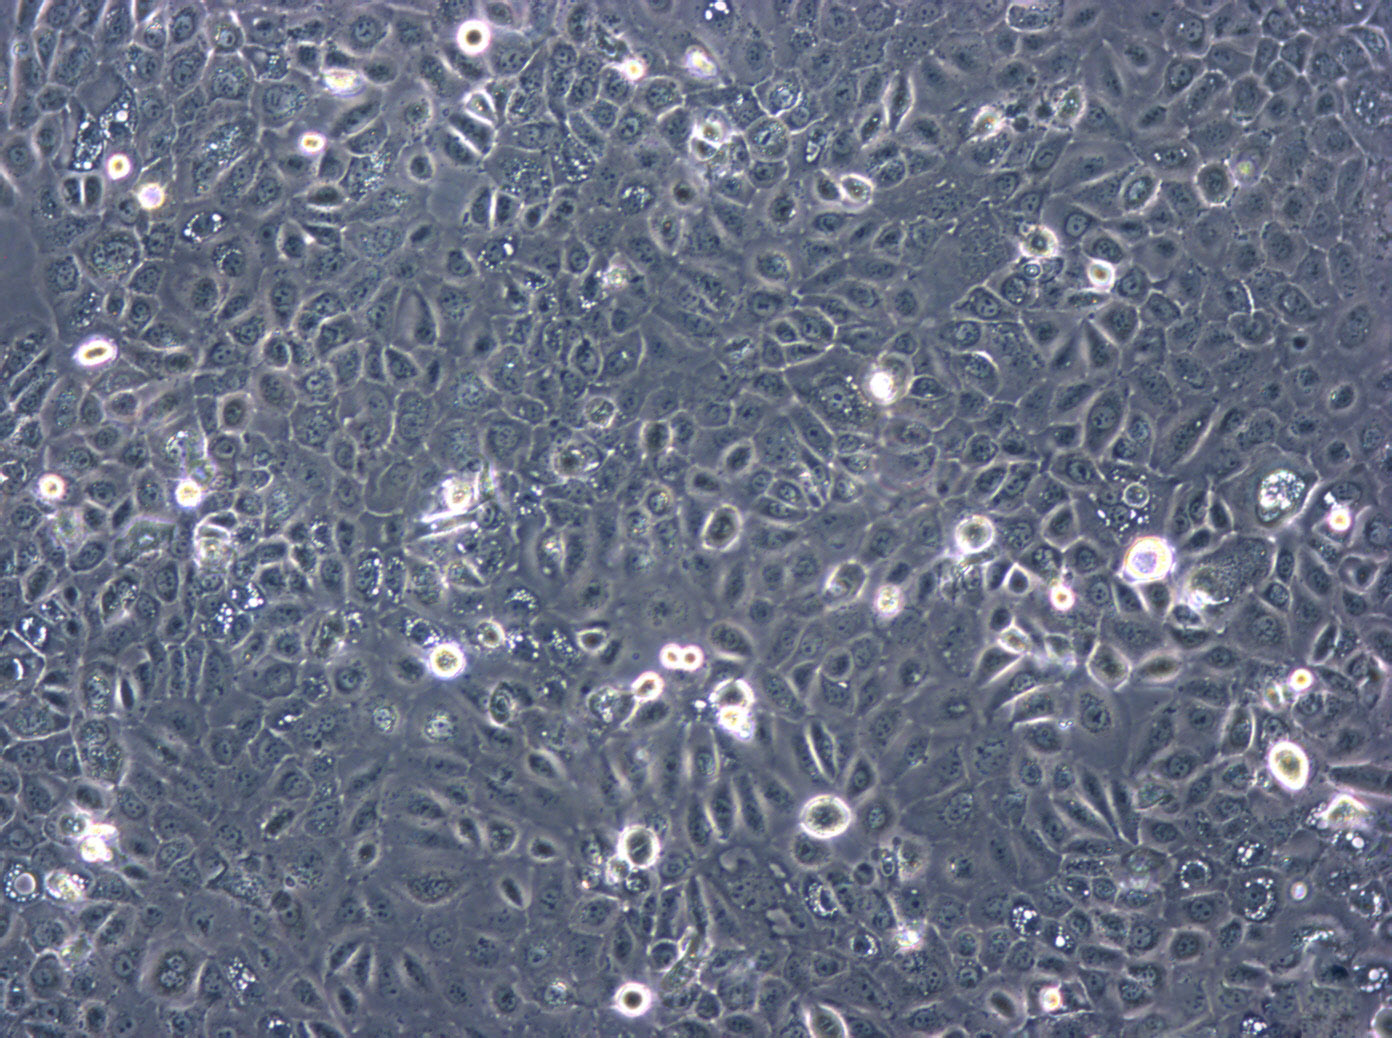 HK-2 [Human kidney] epithelioid cells人肾小管上皮细胞系,HK-2 [Human kidney] epithelioid cells